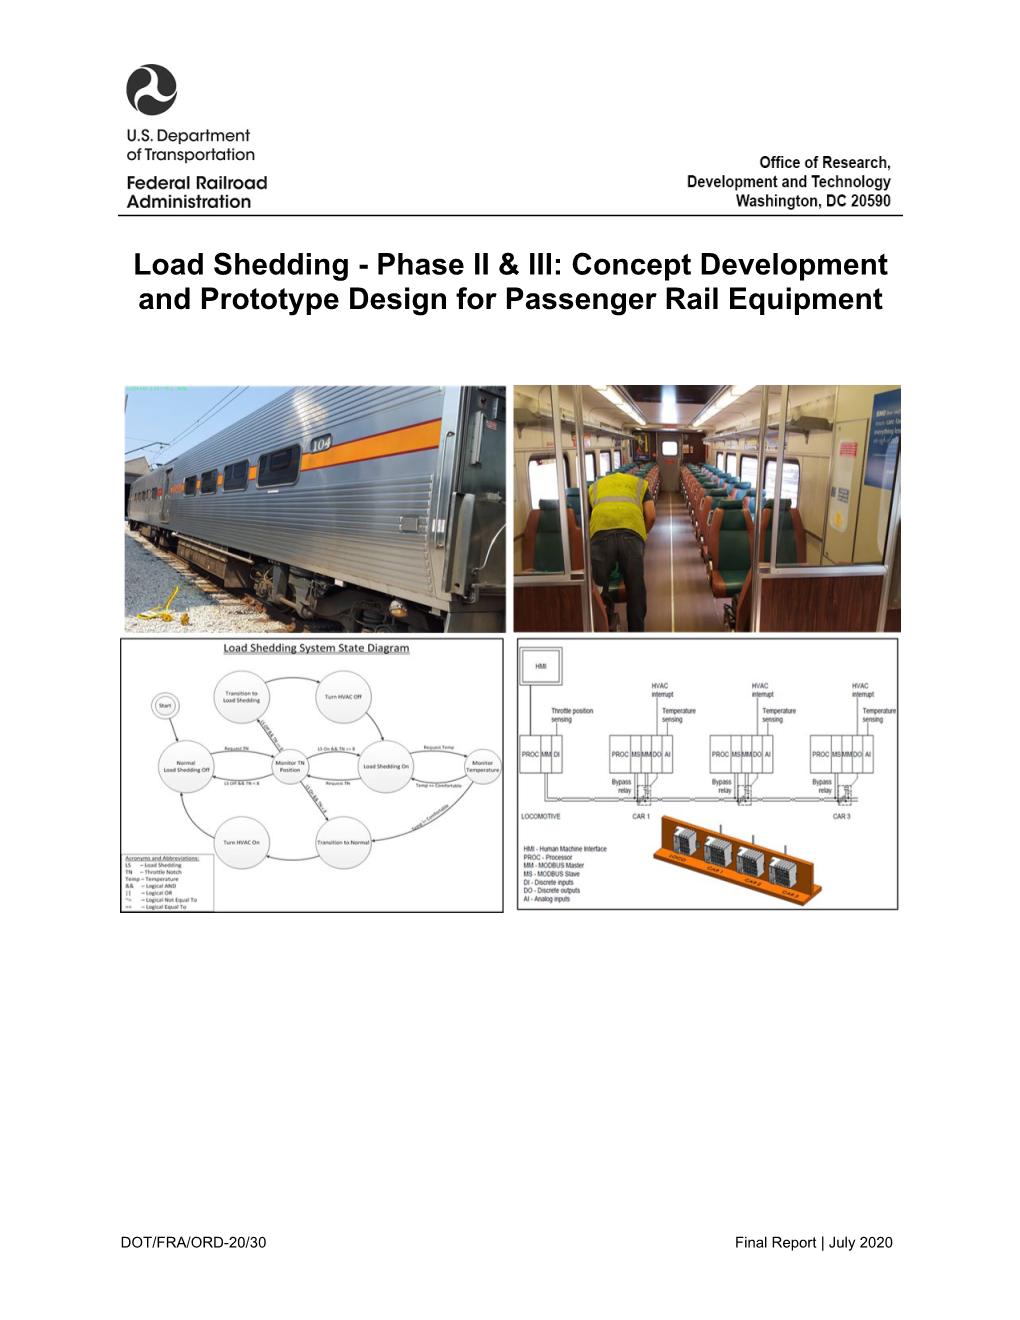 Load Shedding - Phase II & III: Concept Development and Prototype Design for Passenger Rail Equipment